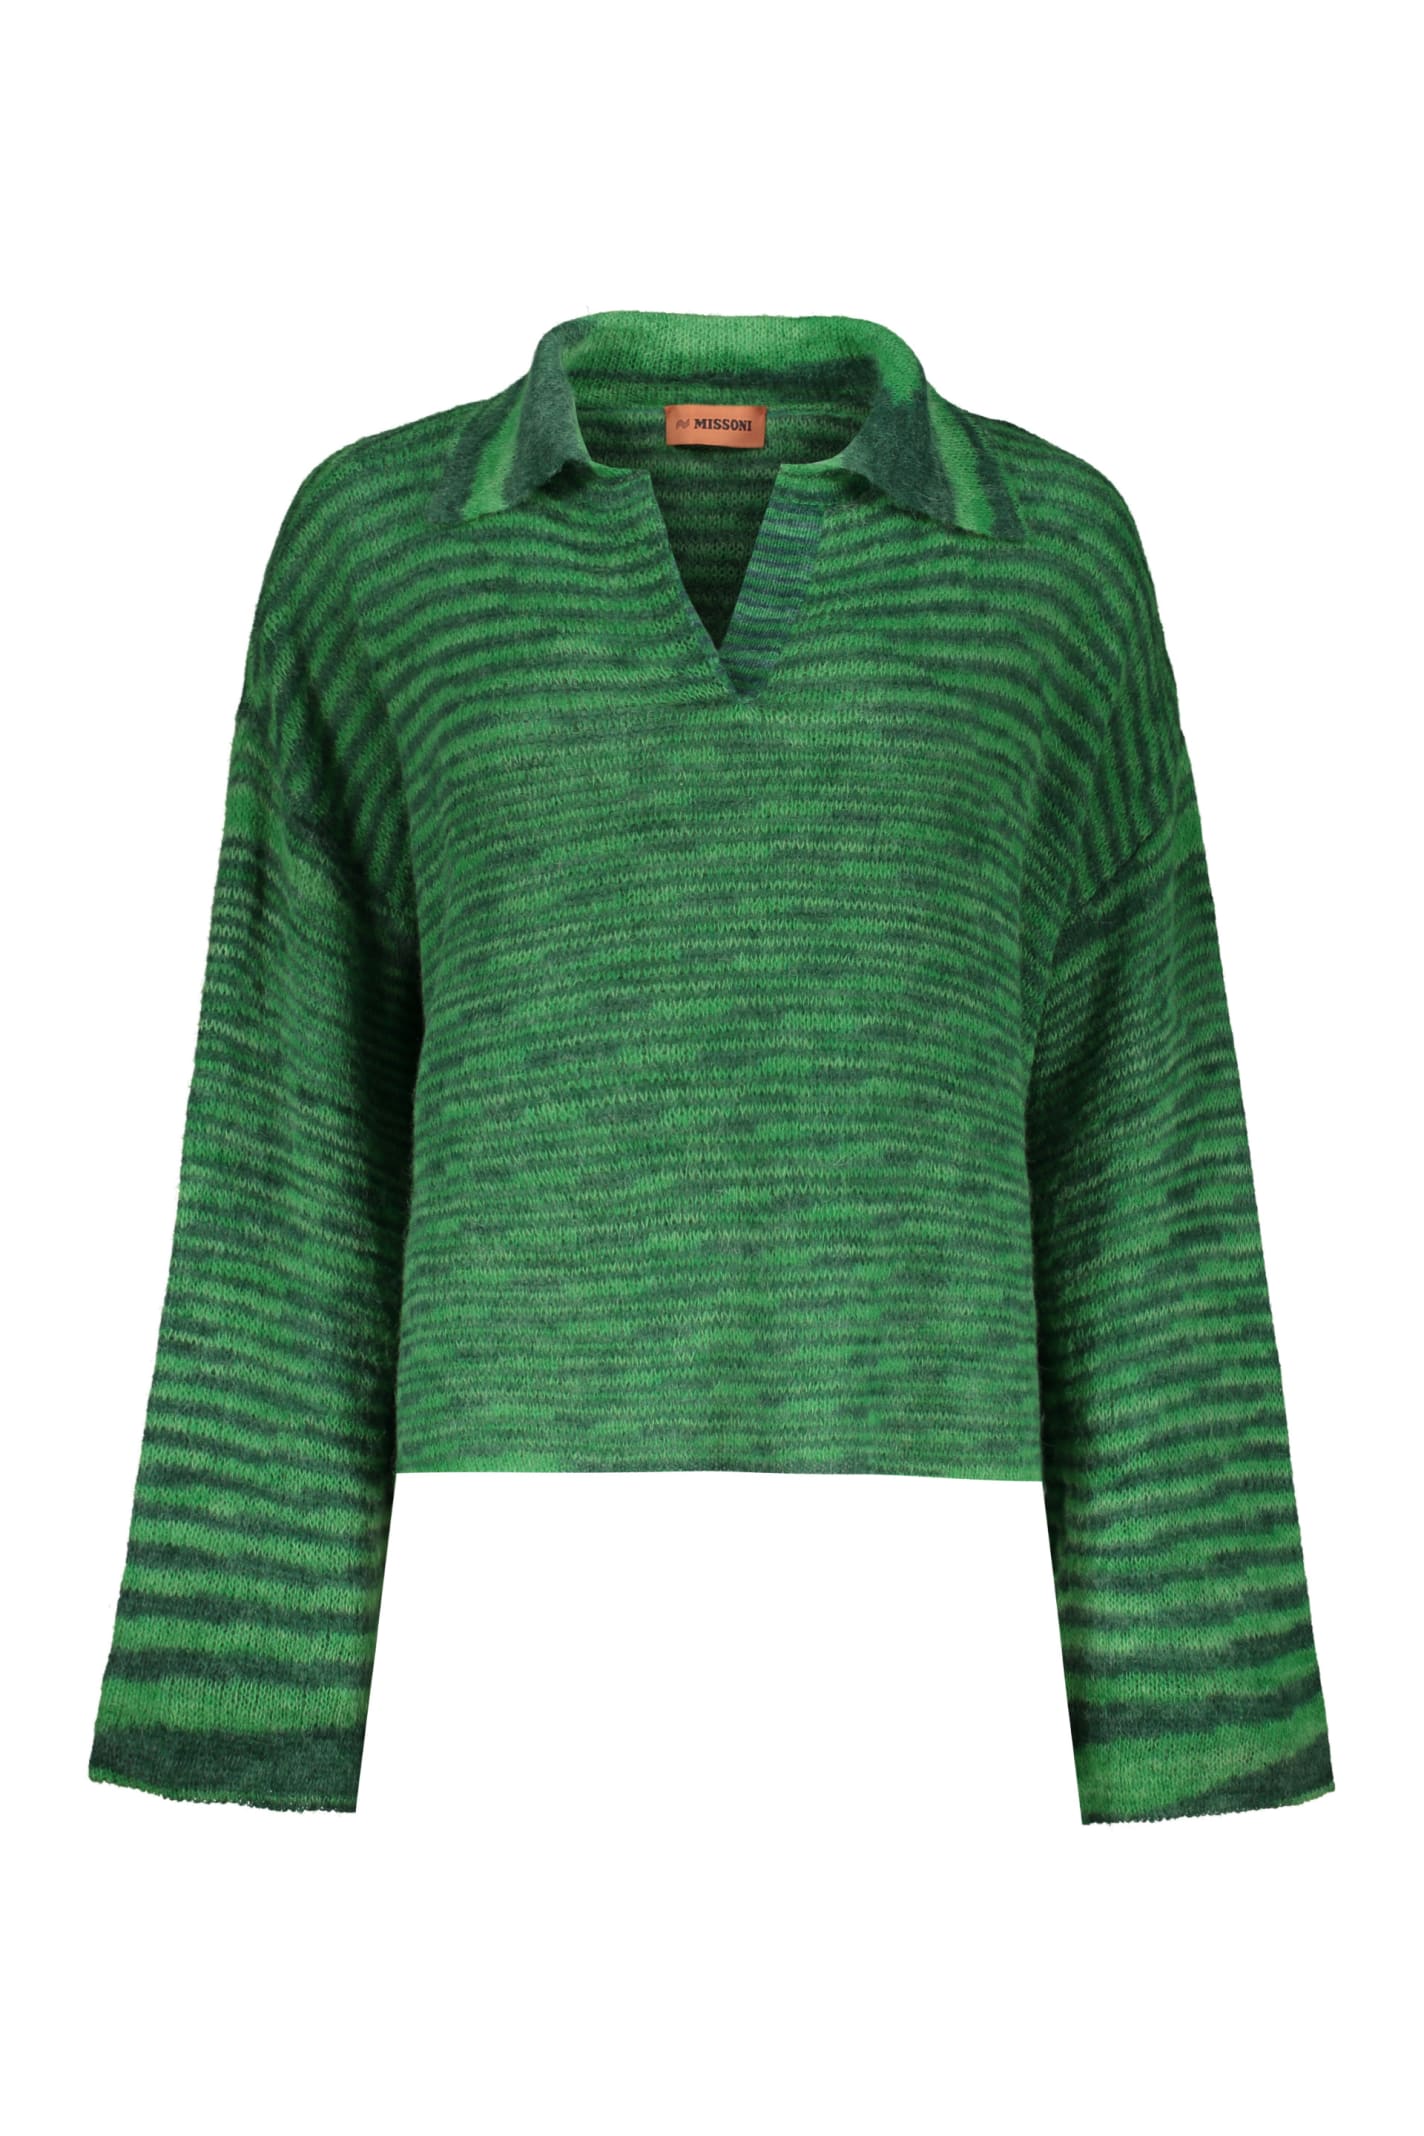 Missoni Wool Blend V-neck Sweater In Green